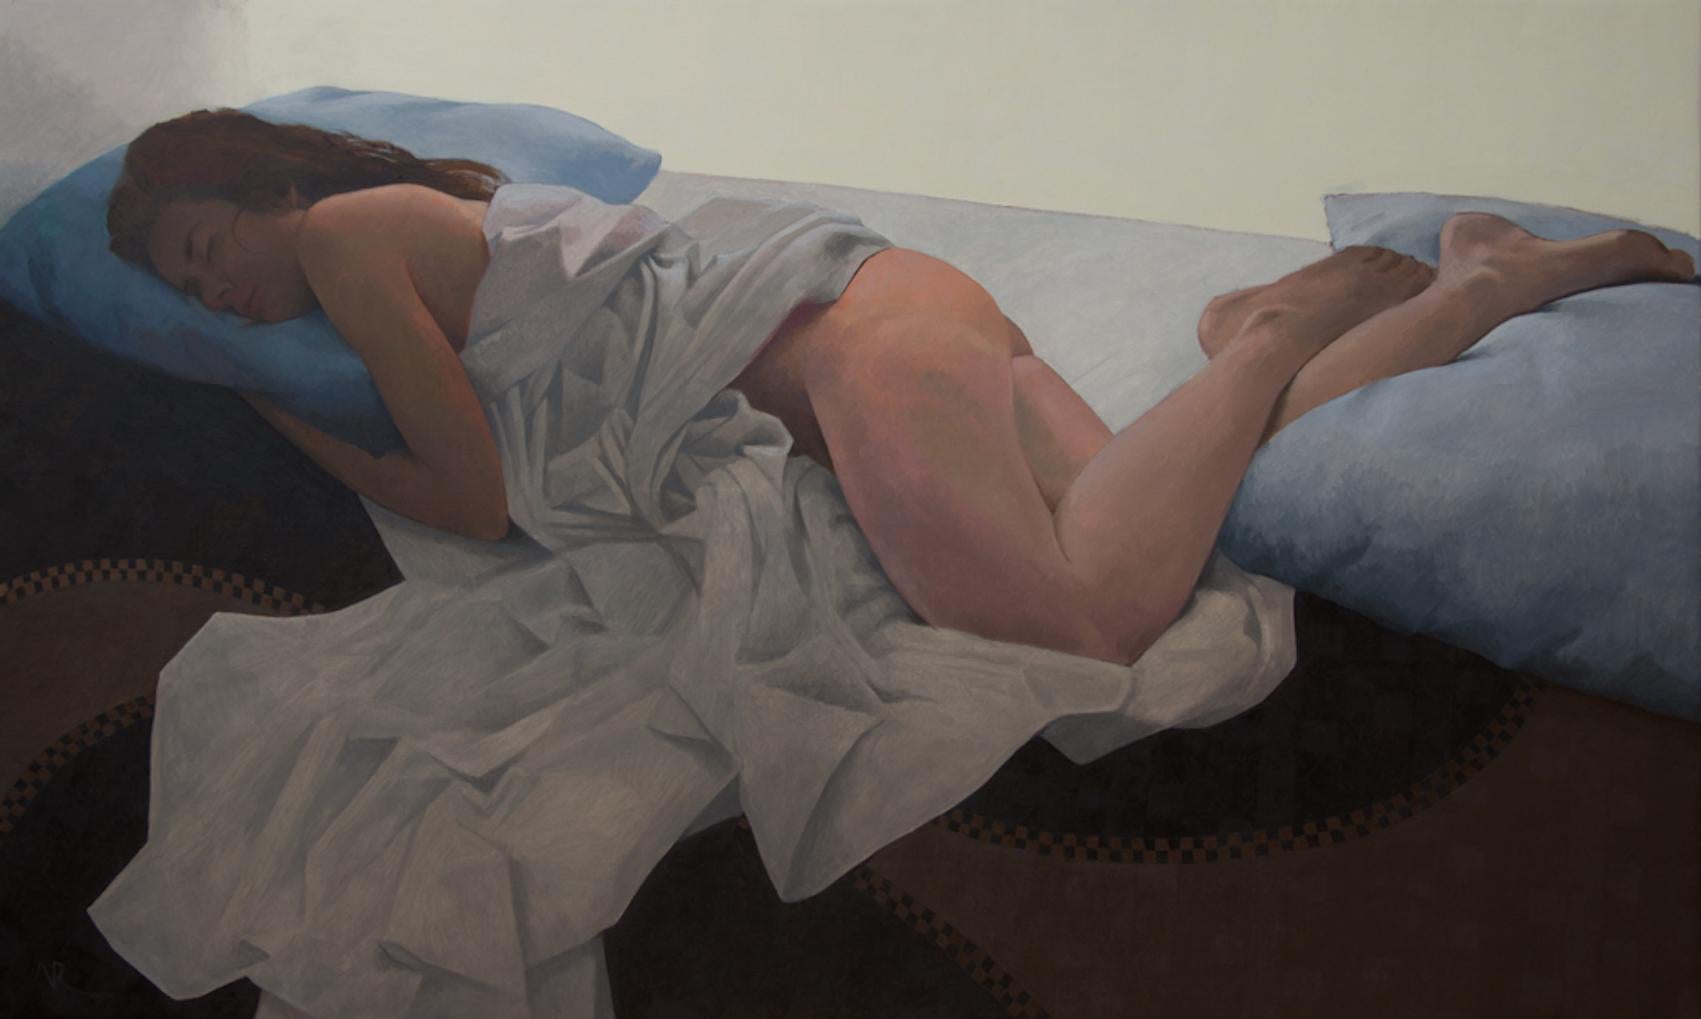 Adolfo Ramon Figurative Painting - Sleeping Woman - 21st Century Contemporary Oil Painting of a Nude Woman